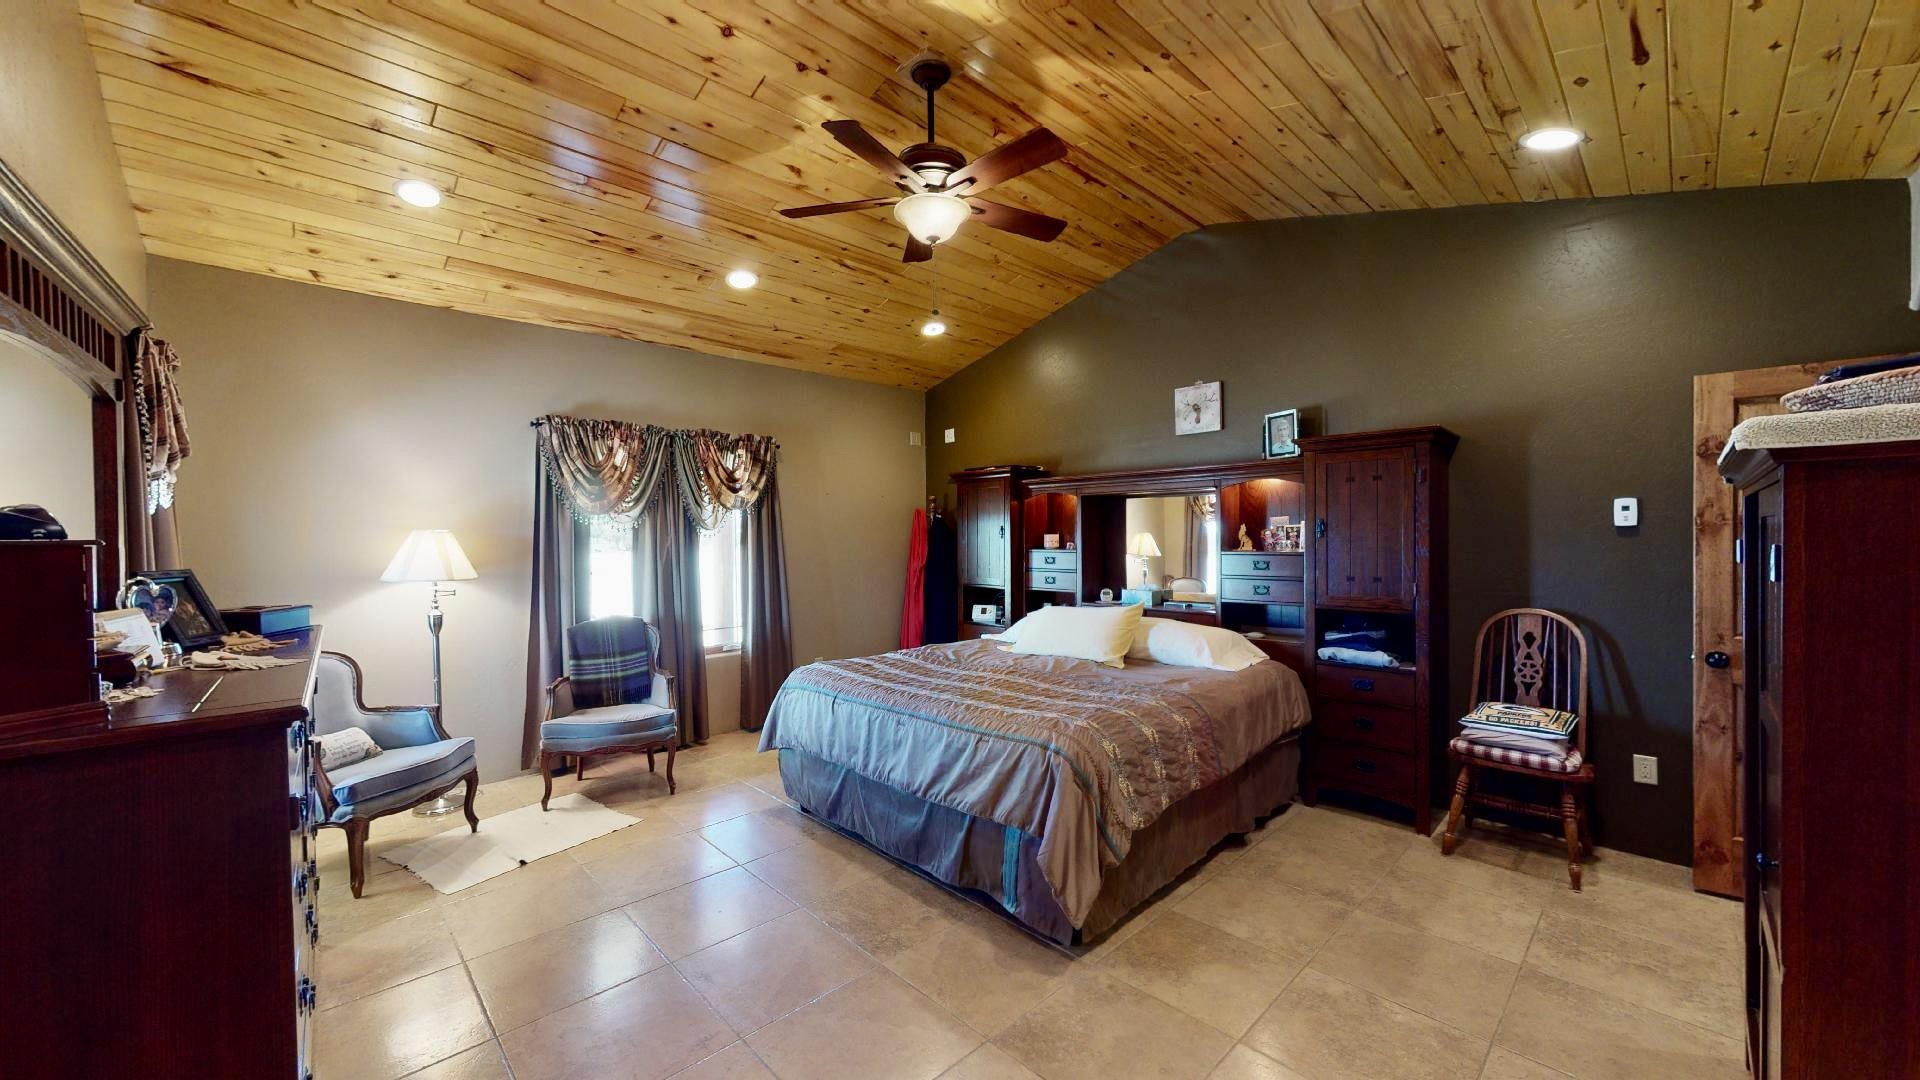 86 James Valley Road, Ramah, New Mexico 87321, 3 Bedrooms Bedrooms, ,4 BathroomsBathrooms,Farm,For Sale,86 James Valley Road,202101730